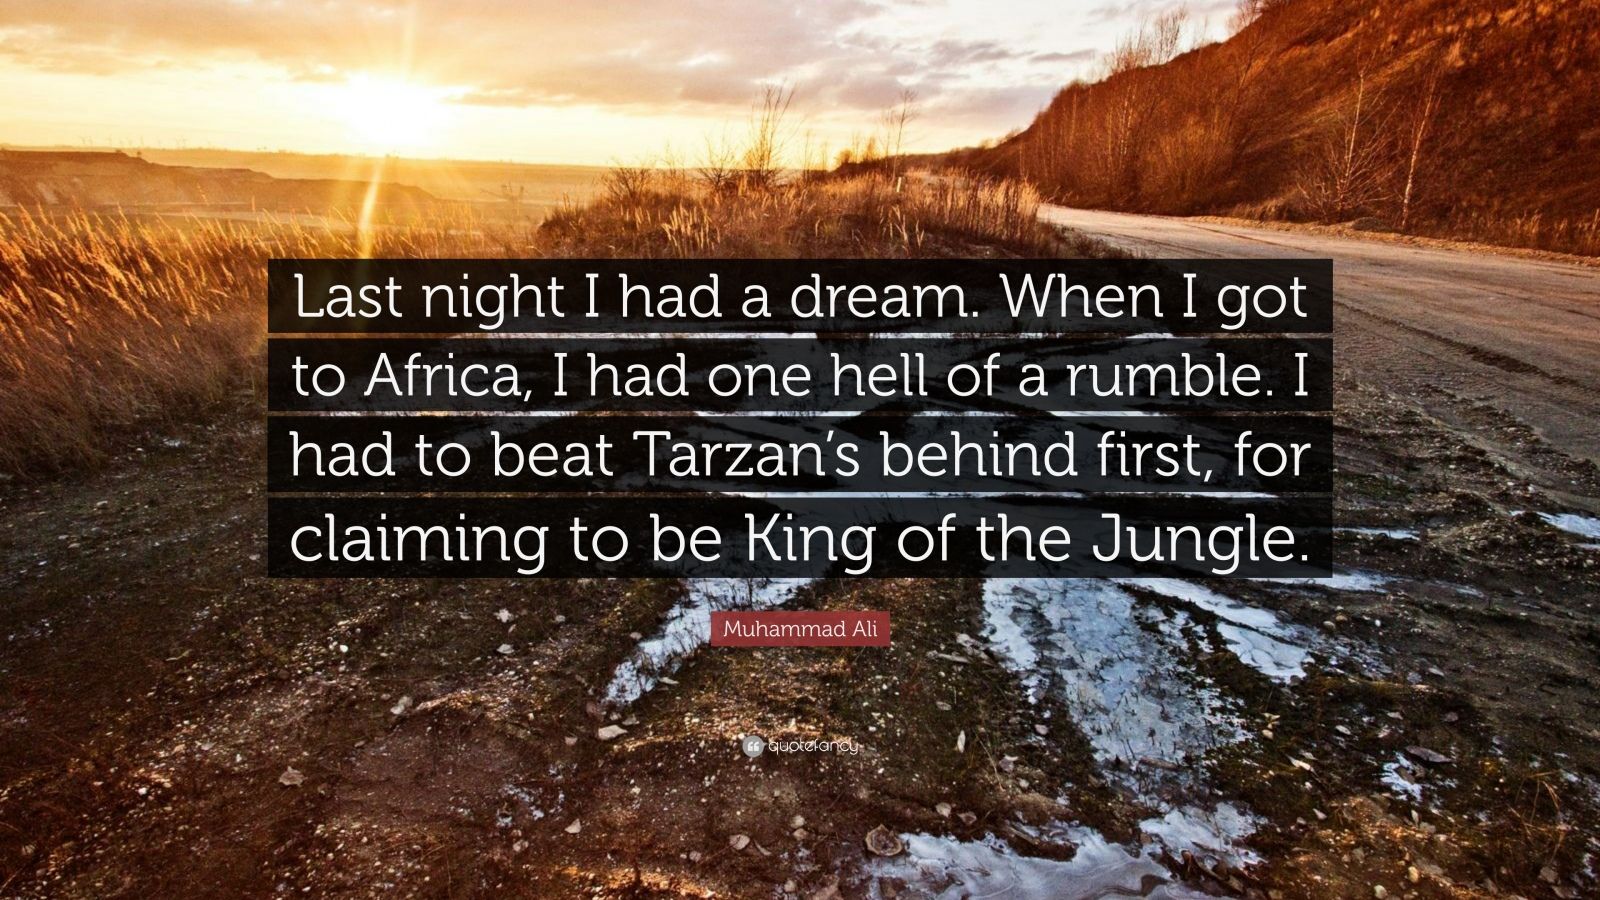 Muhammad Ali Quote: “Last night I had a dream. When I got to Africa, I